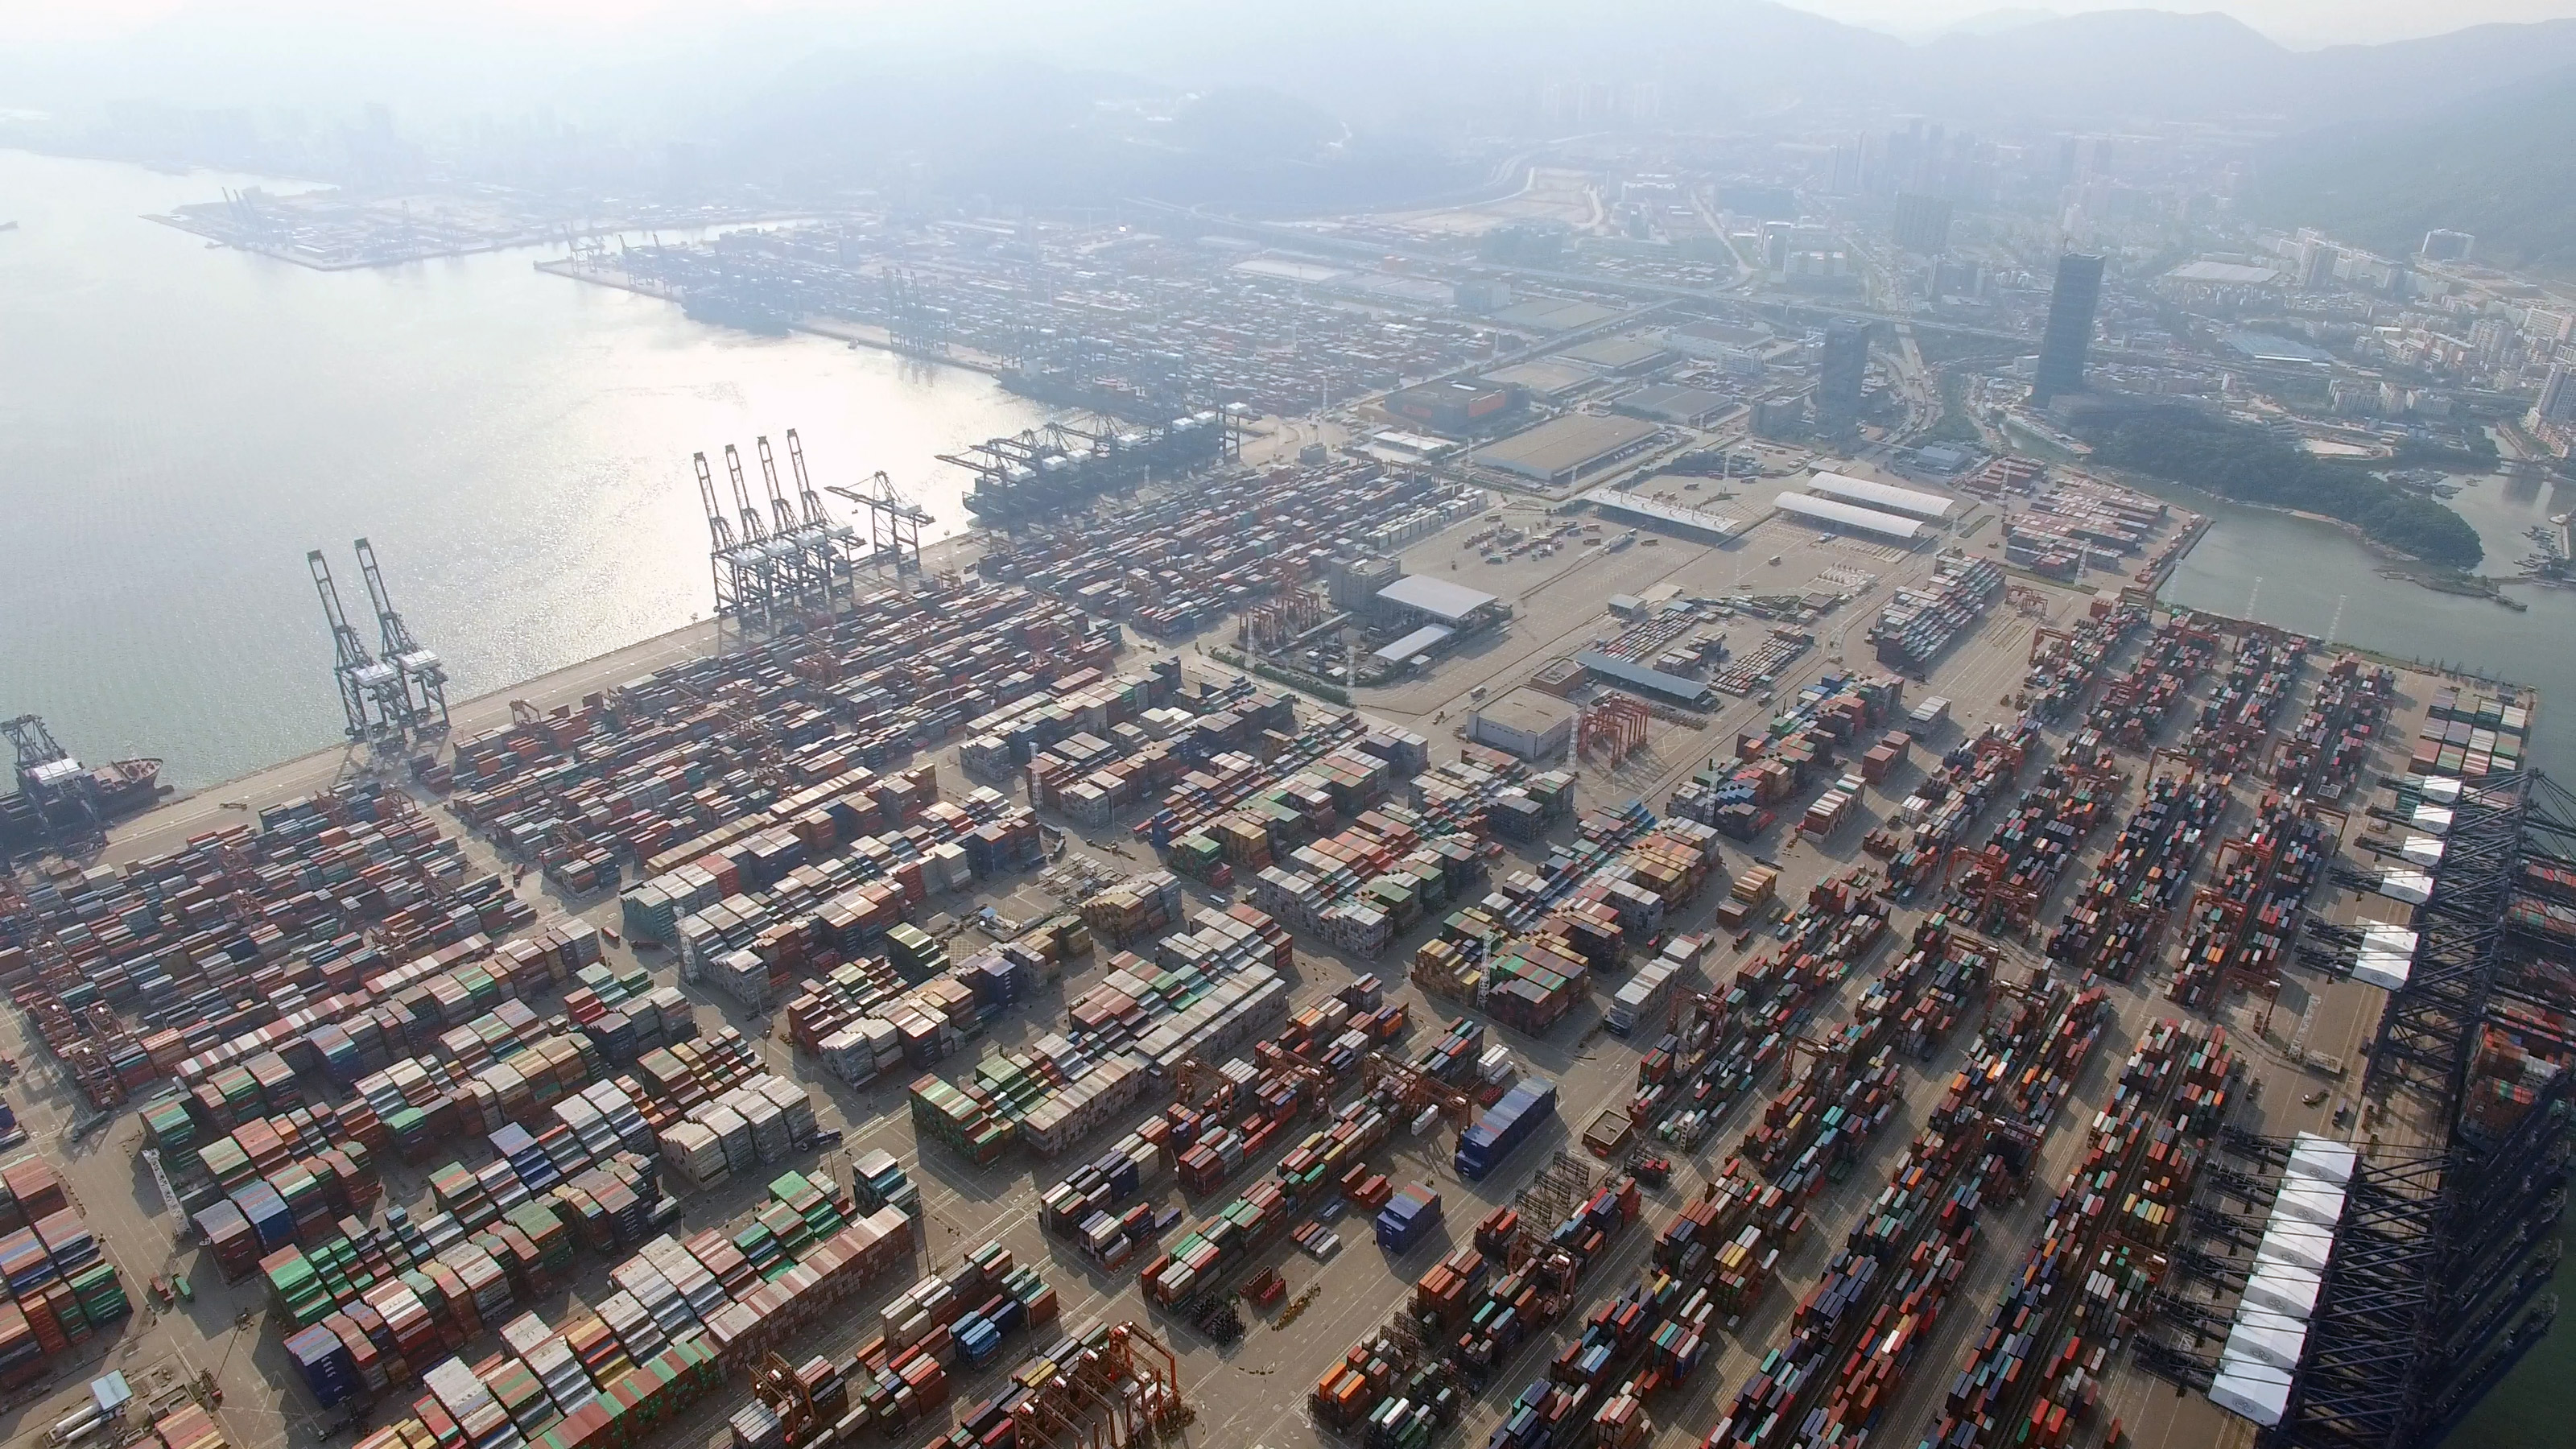 Yantian International Container Terminals - Wikipedia